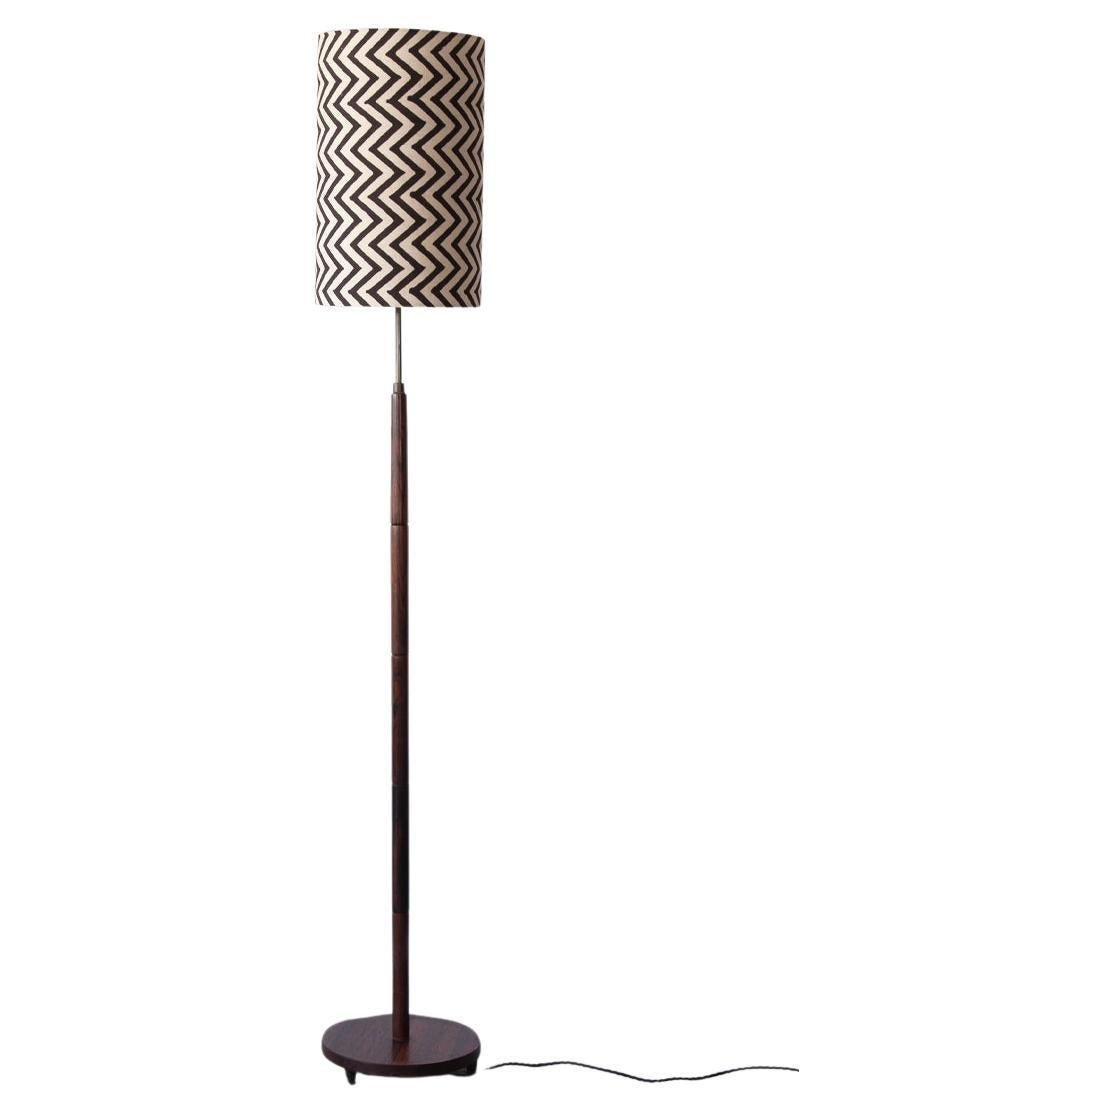 Minimalist Rosewood Floor Lamp Made in Denmark in the 1960's, Mid Century